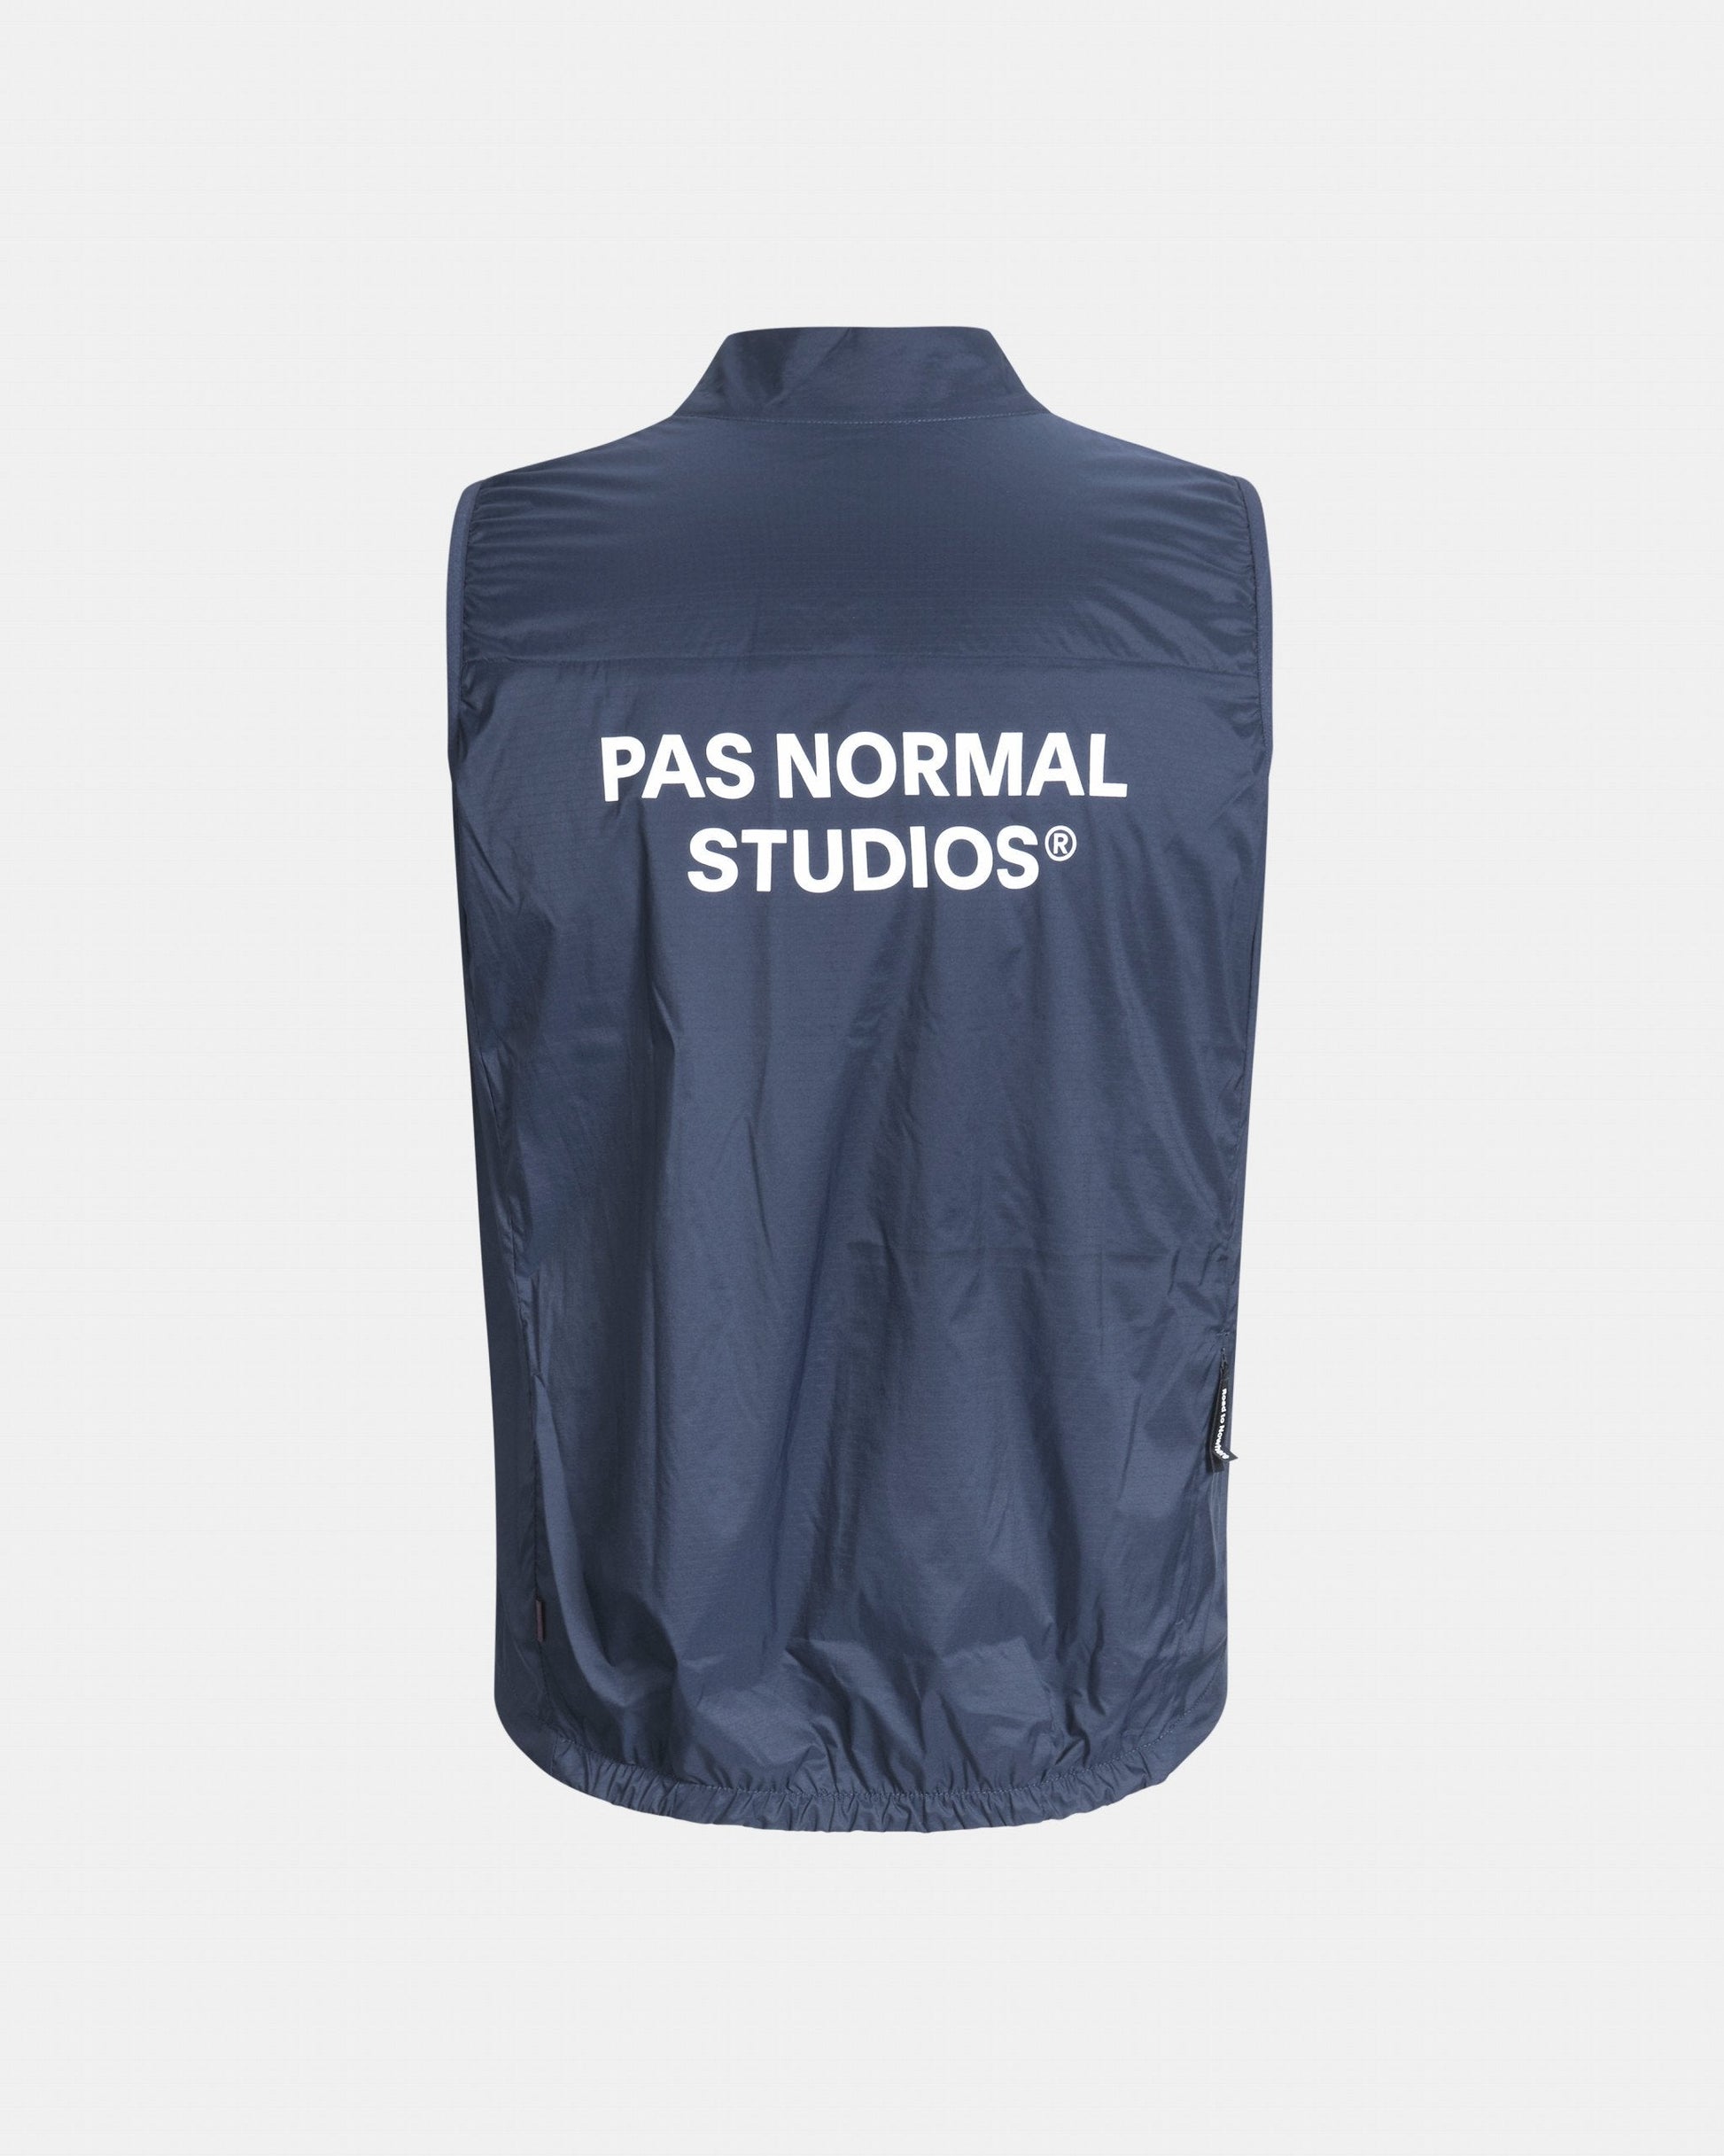 Pas Normal Studios - Veste Essential Insulated Homme Vestes Pas Normal Studios 